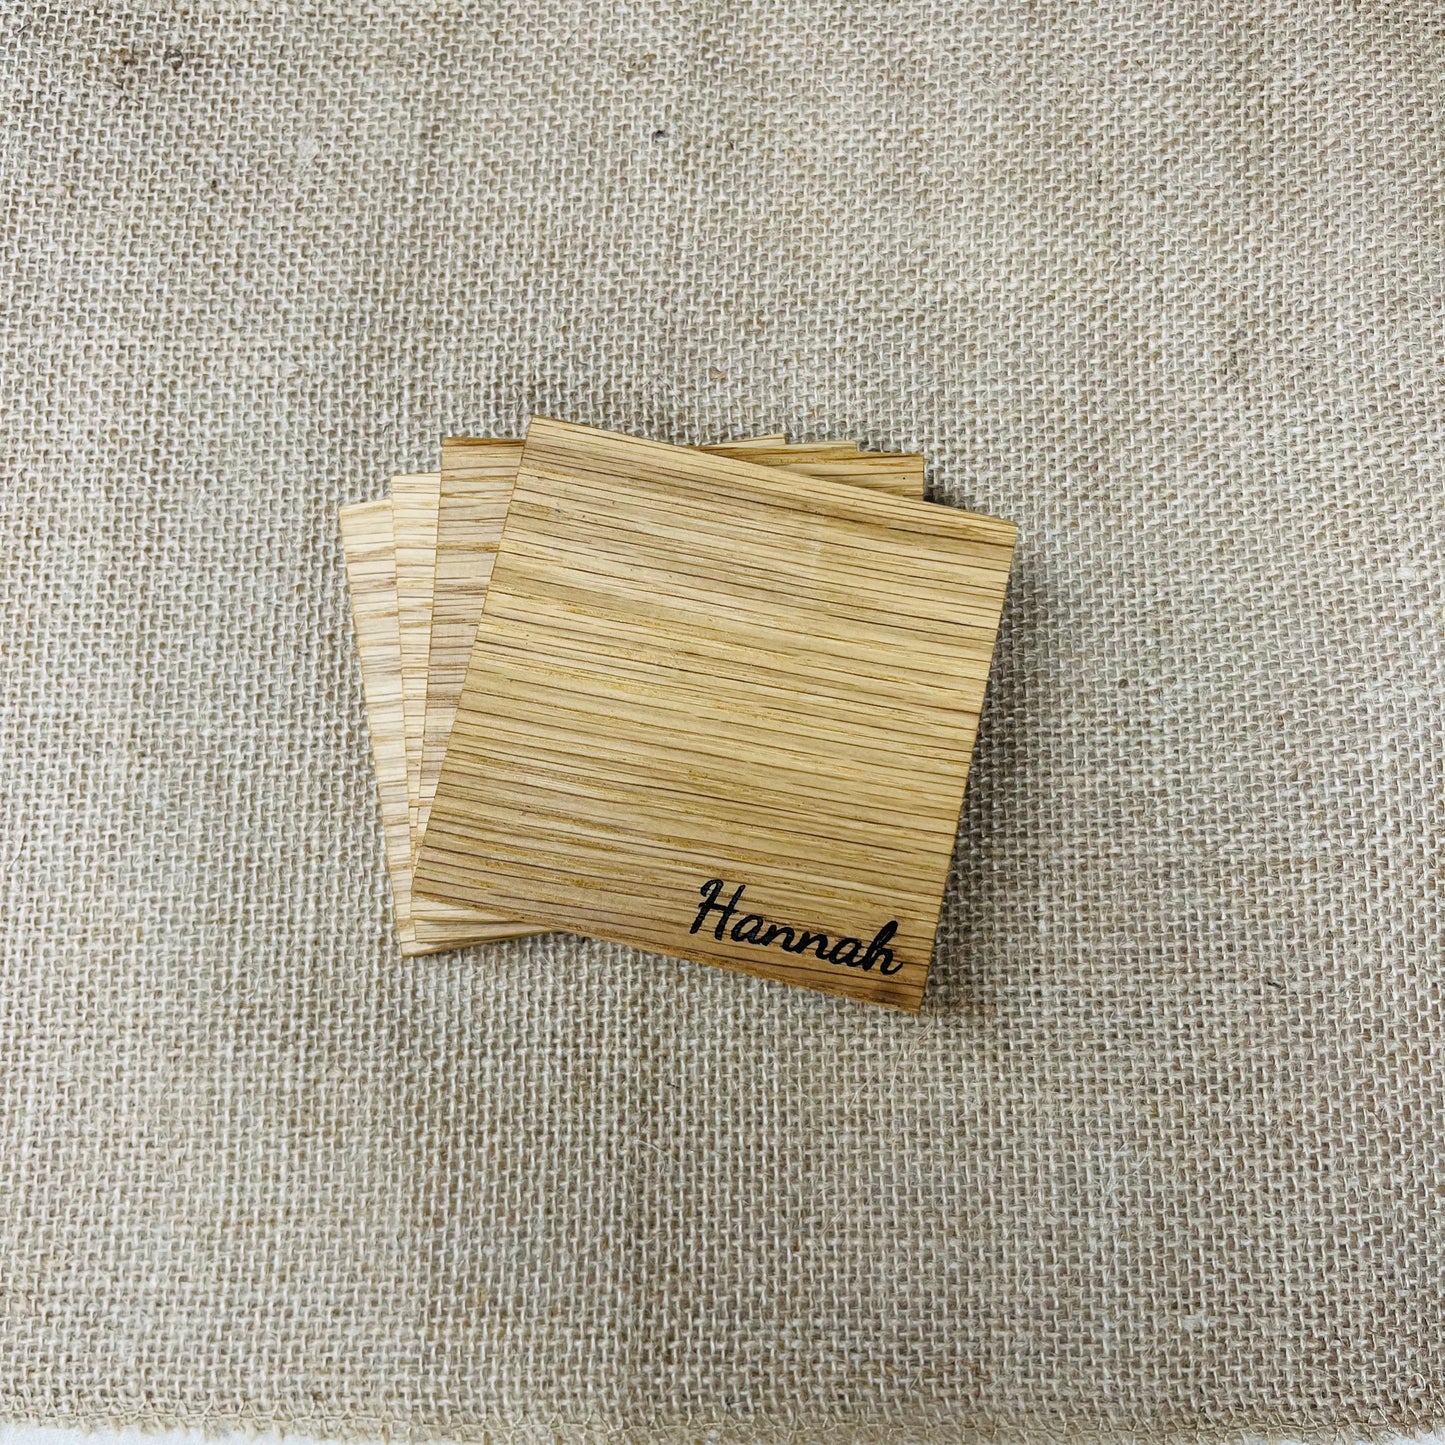 Personalised Name Coaster - Engraved Solid Oak